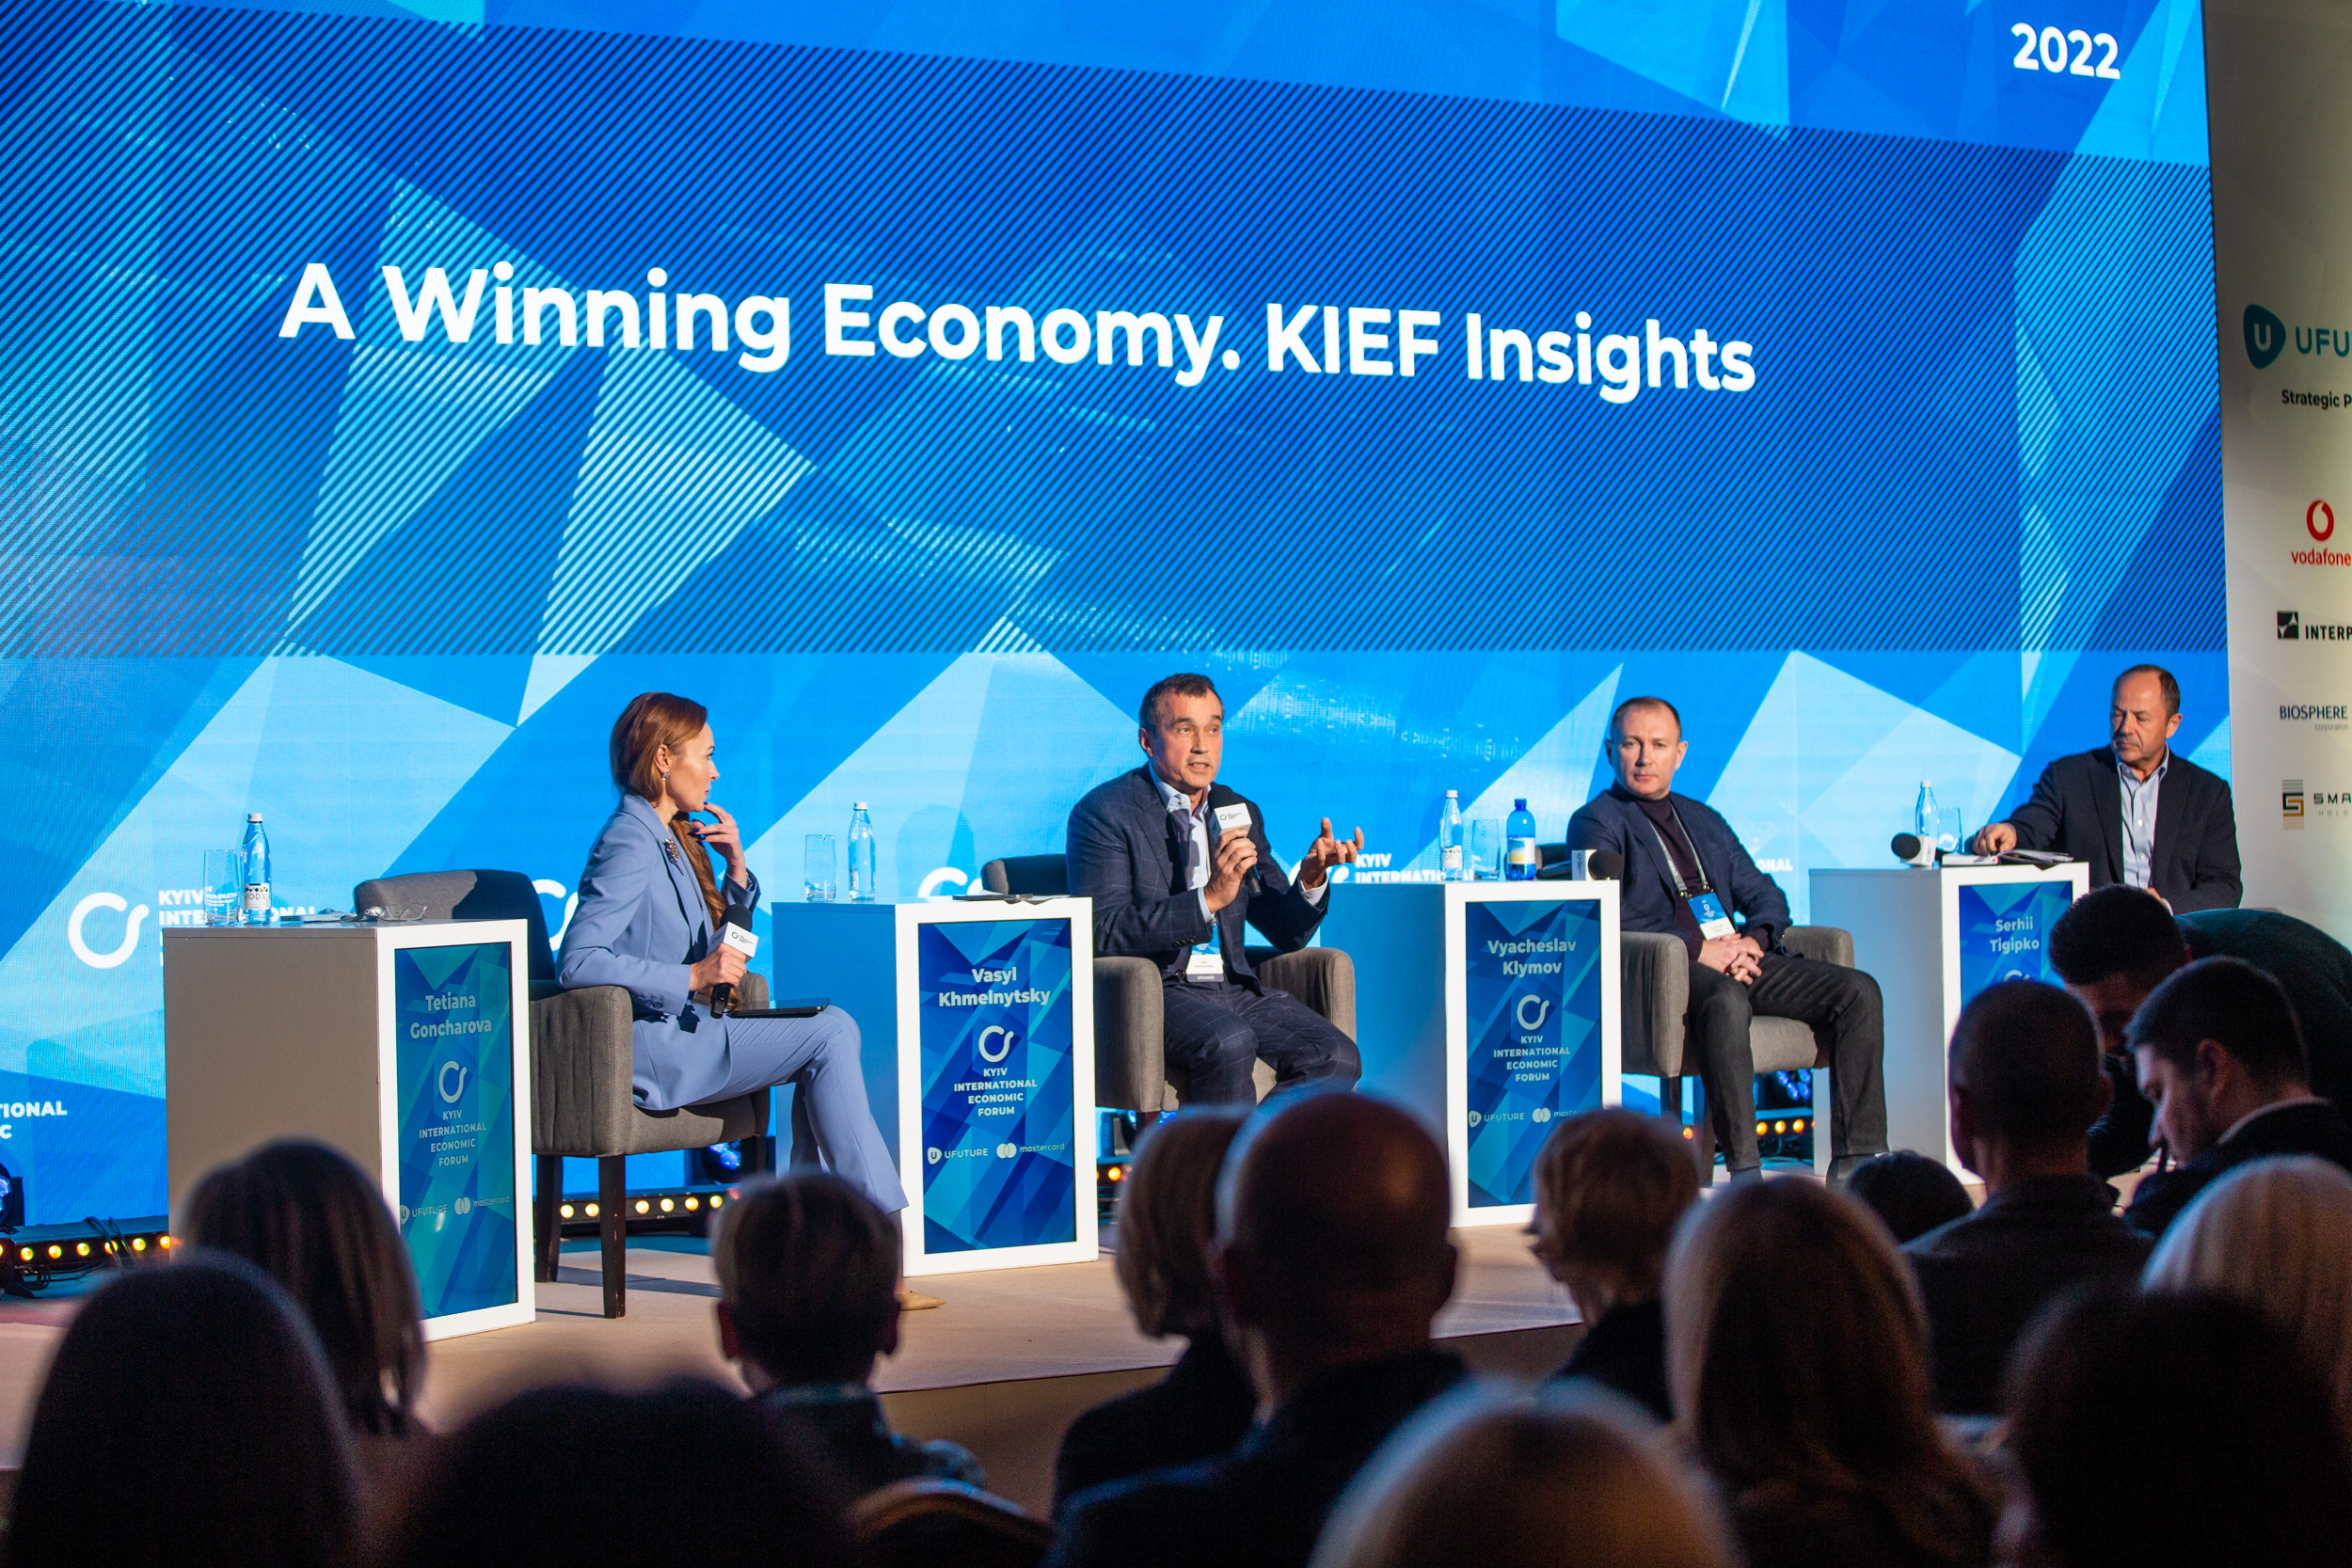  A Winning Economy. KIEF Insights 2022